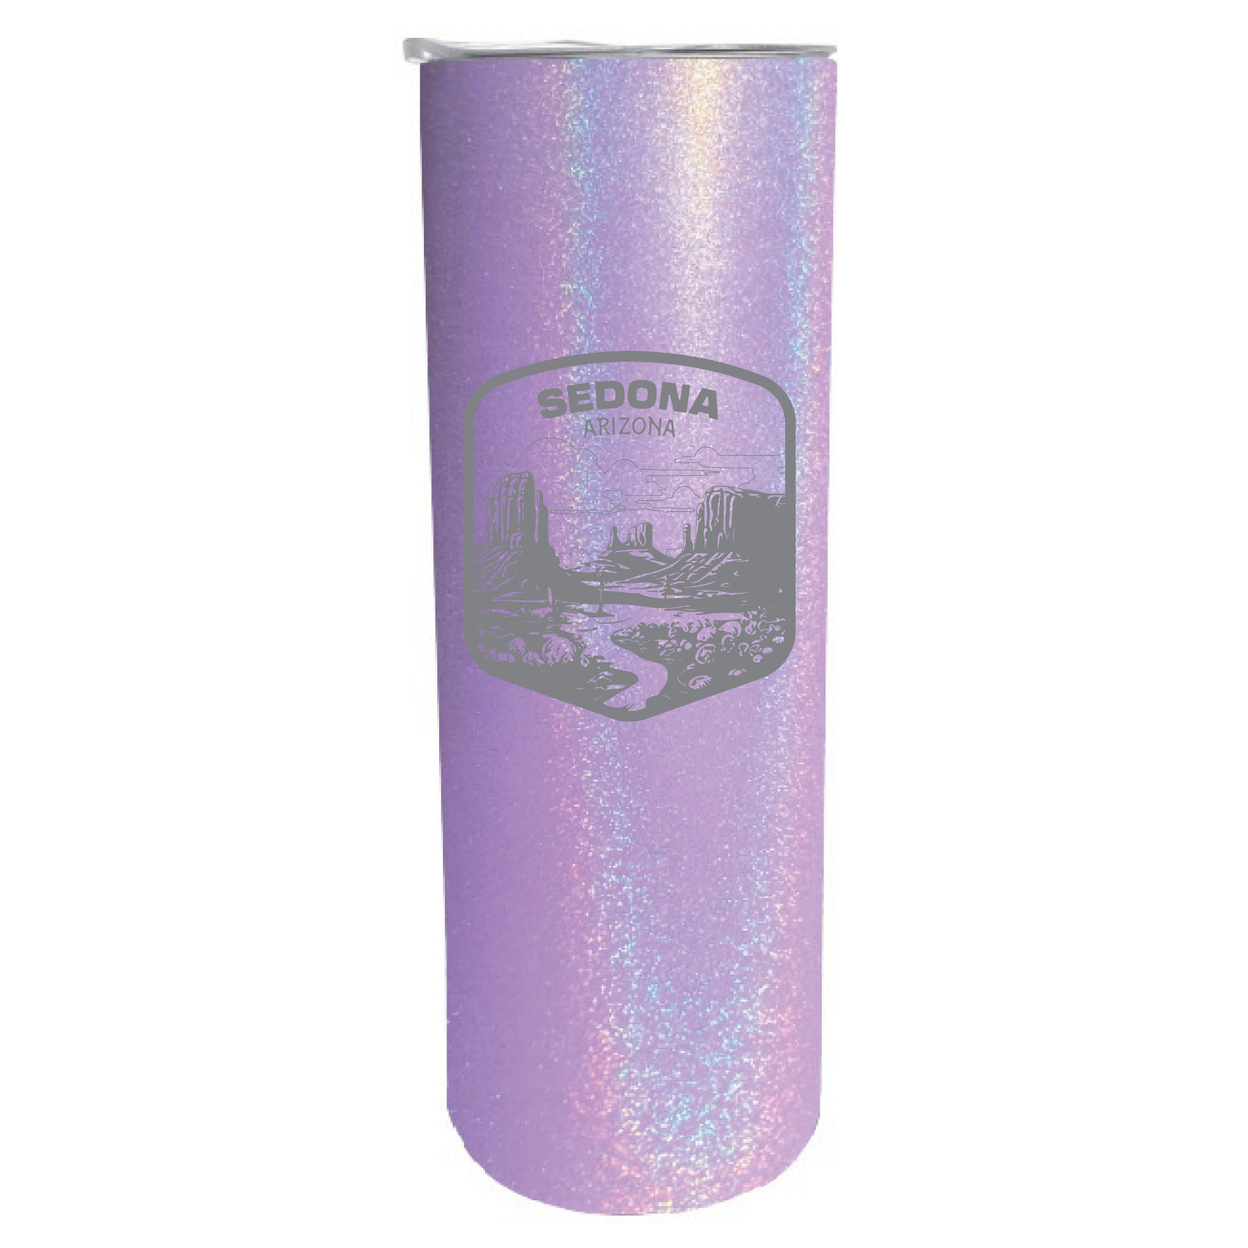 Sedona Arizona Souvenir 20 Oz Engraved Insulated Stainless Steel Skinny Tumbler - Purple Glitter,,4-Pack